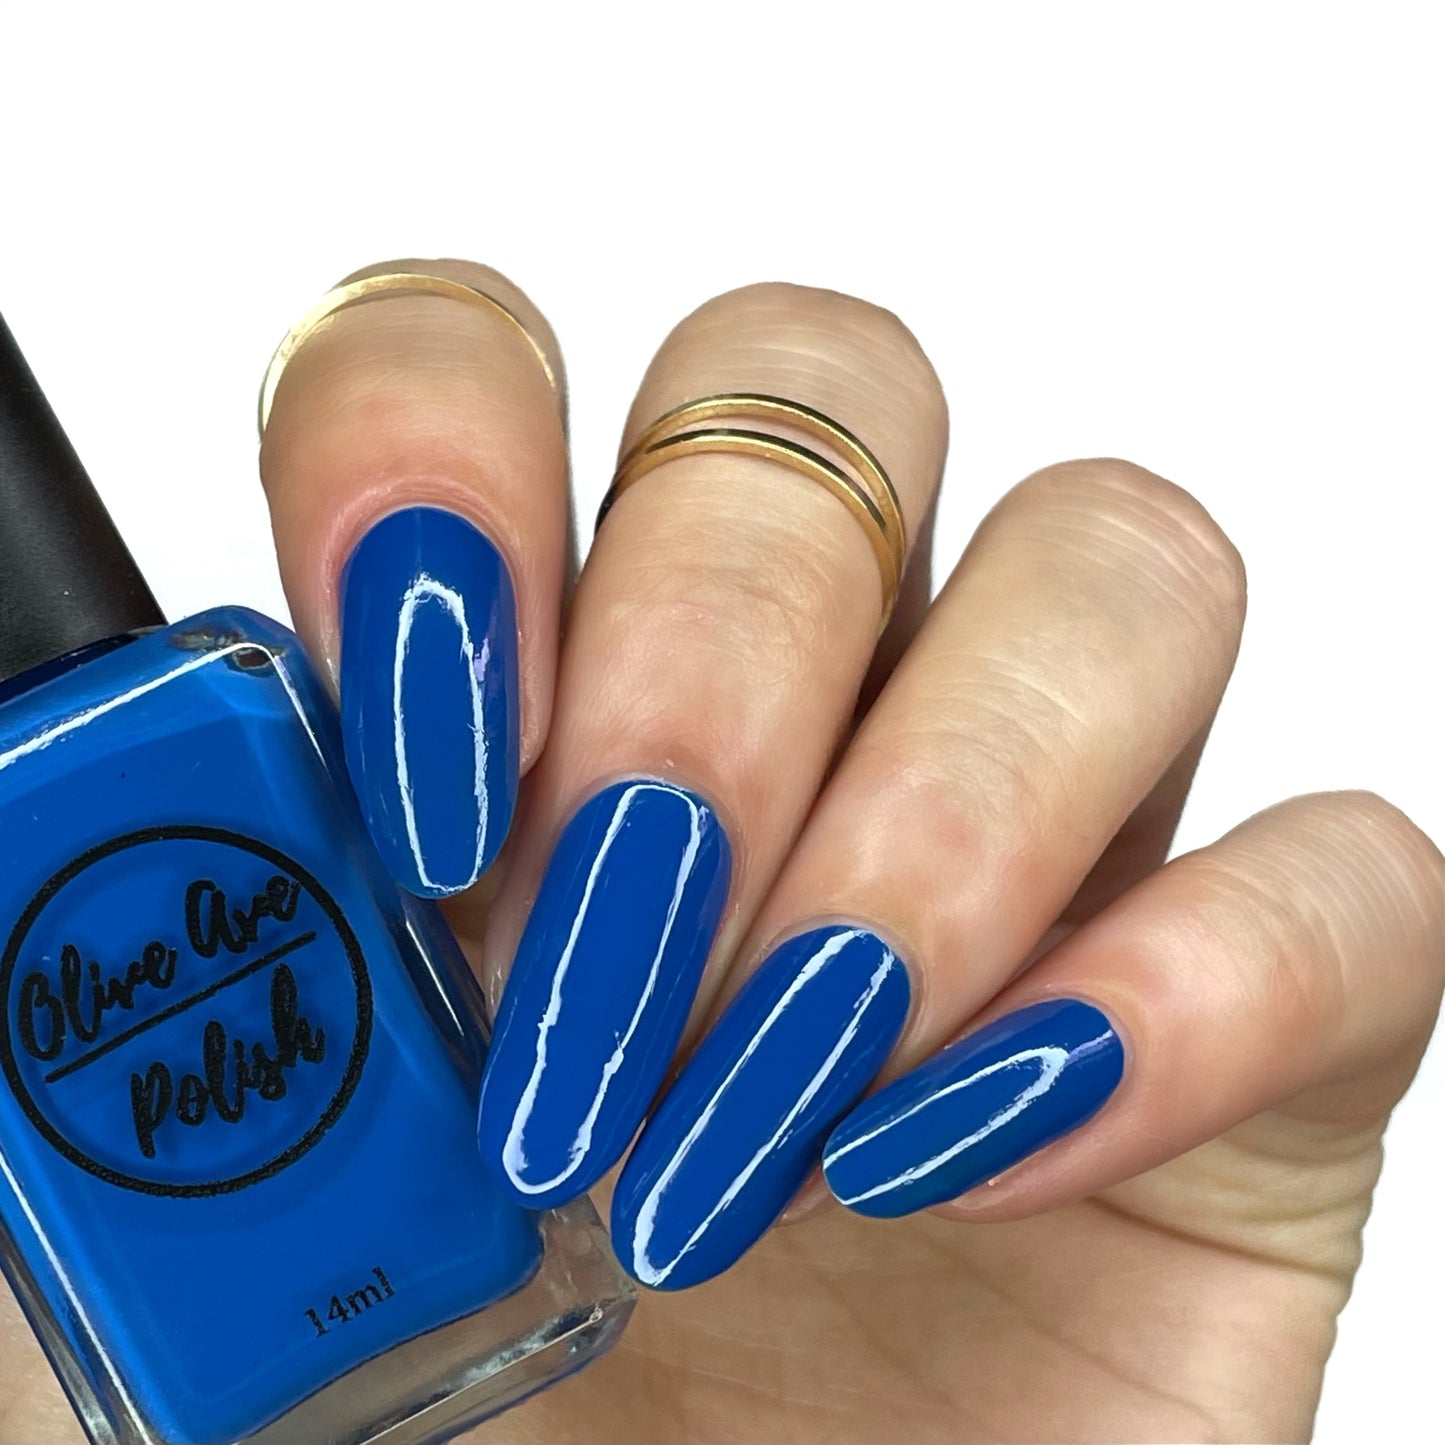 royal blue nail polish swatch on pale skin tone